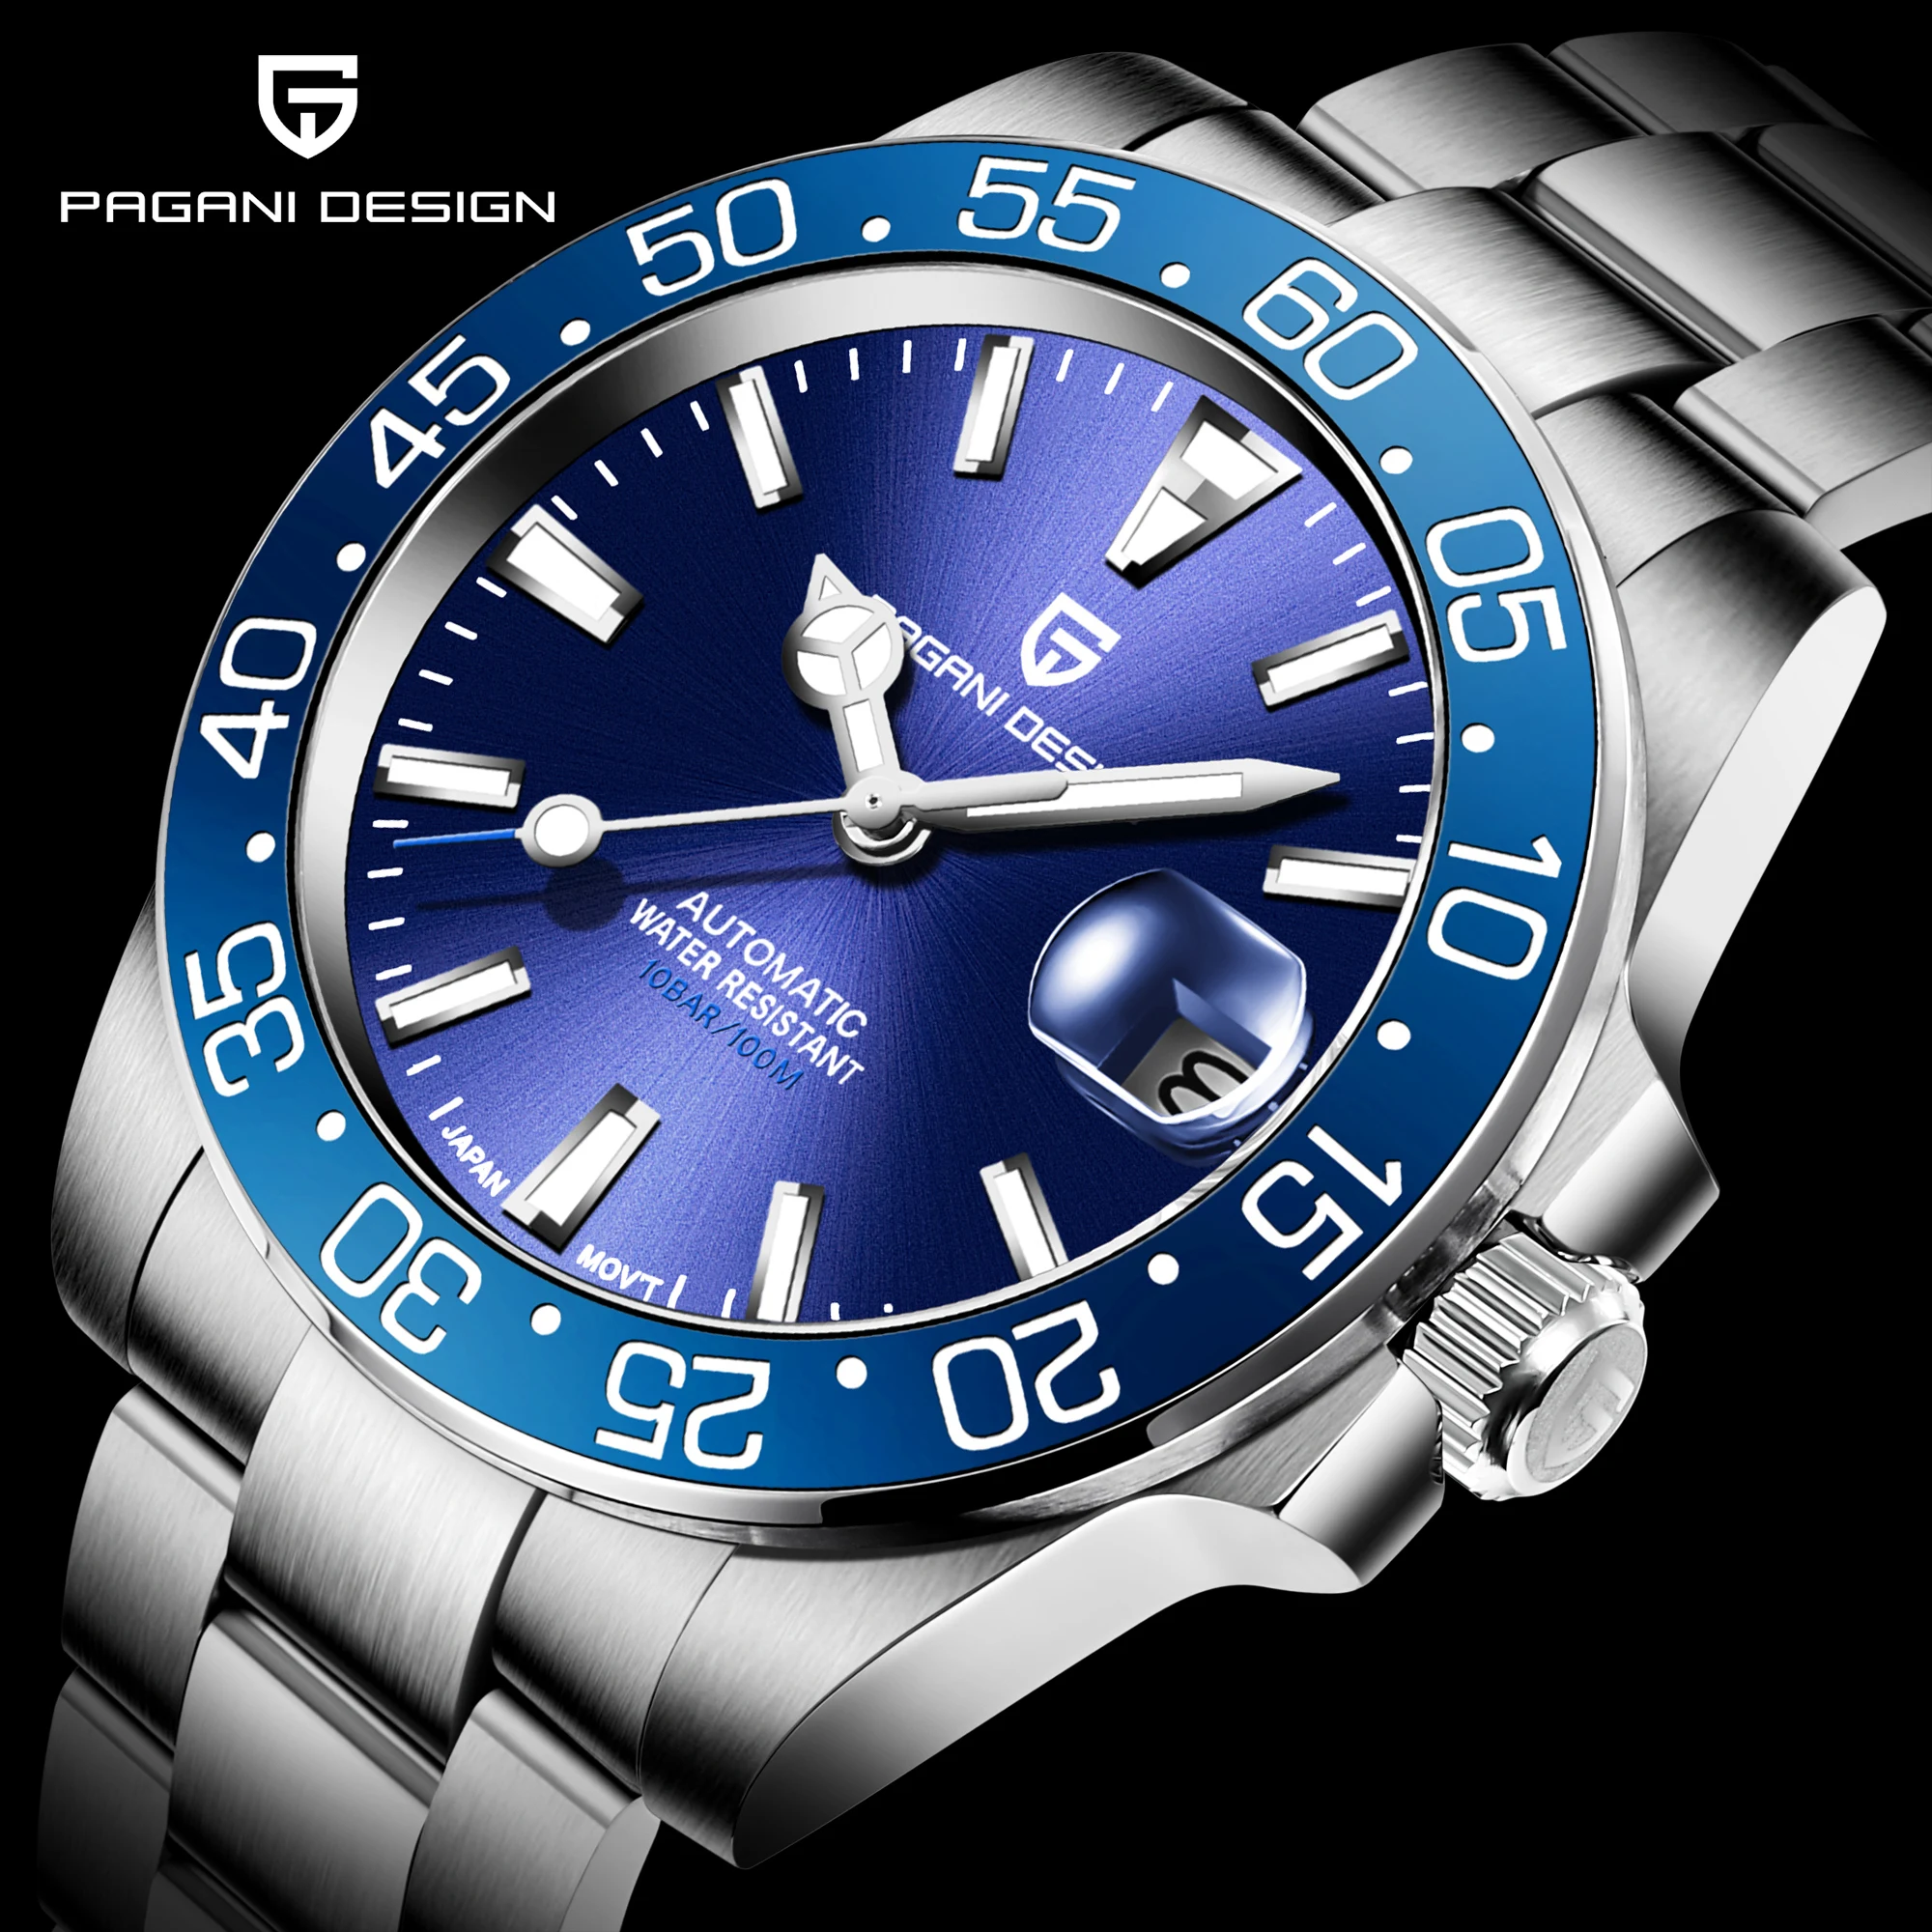 2021 PAGANI DESIGN Top Brand Men's Automatic Mechanical Watch 316 Stainless Steel Sapphire Glass Waterproof Watch reloj hombre